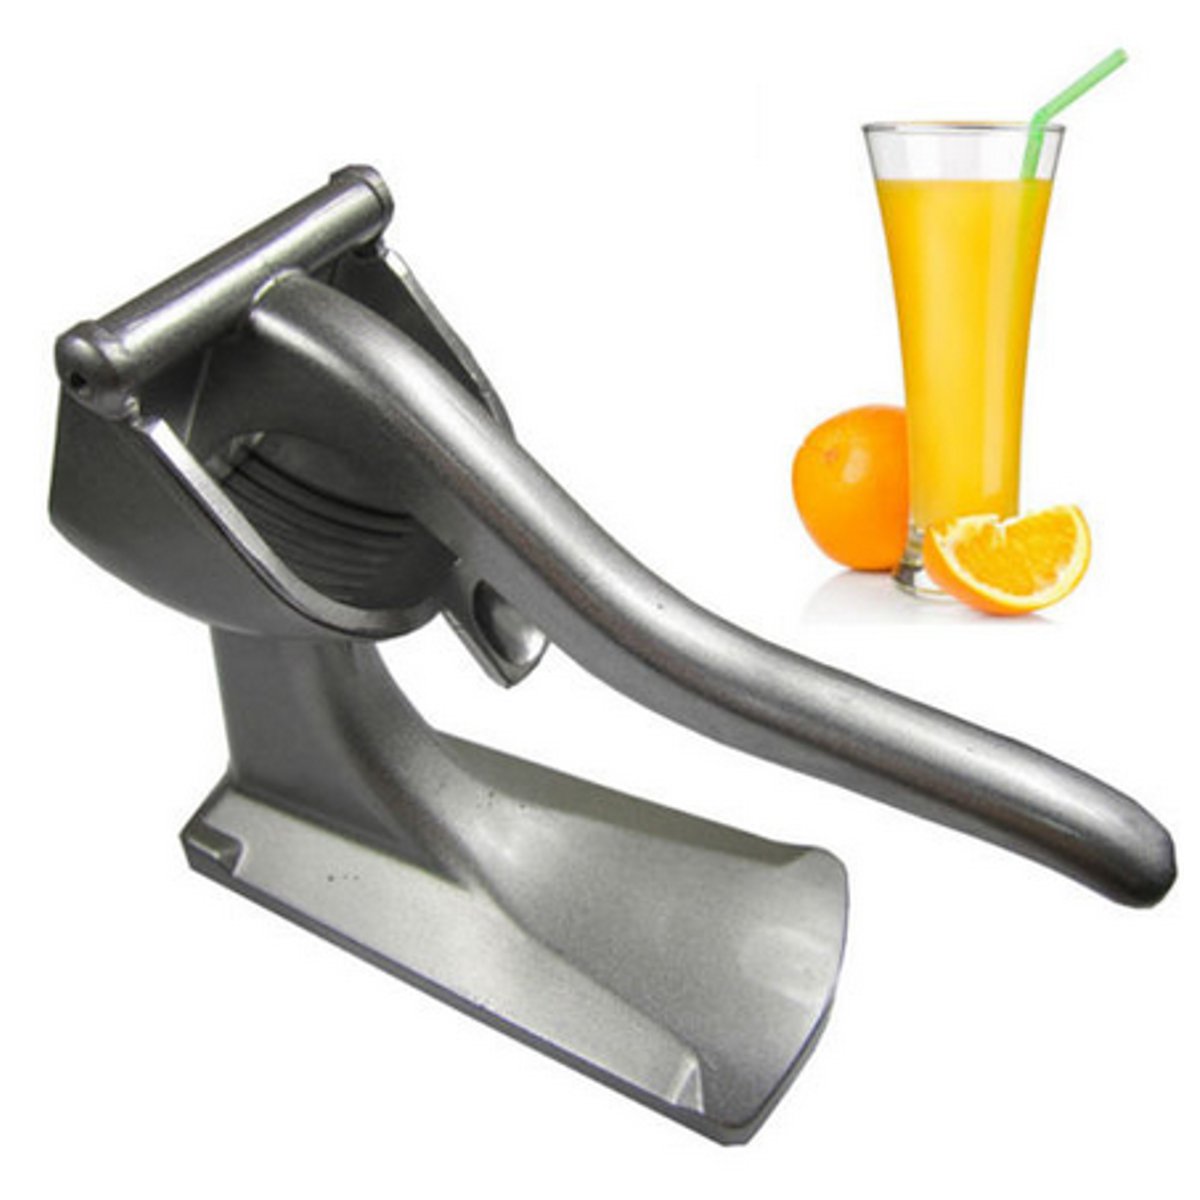 Heavy Duty Mini Fruit Press Household Press Lemon Orange Lime Citrus Fresh Drink Kitchen Tool Home Squeezer Machine